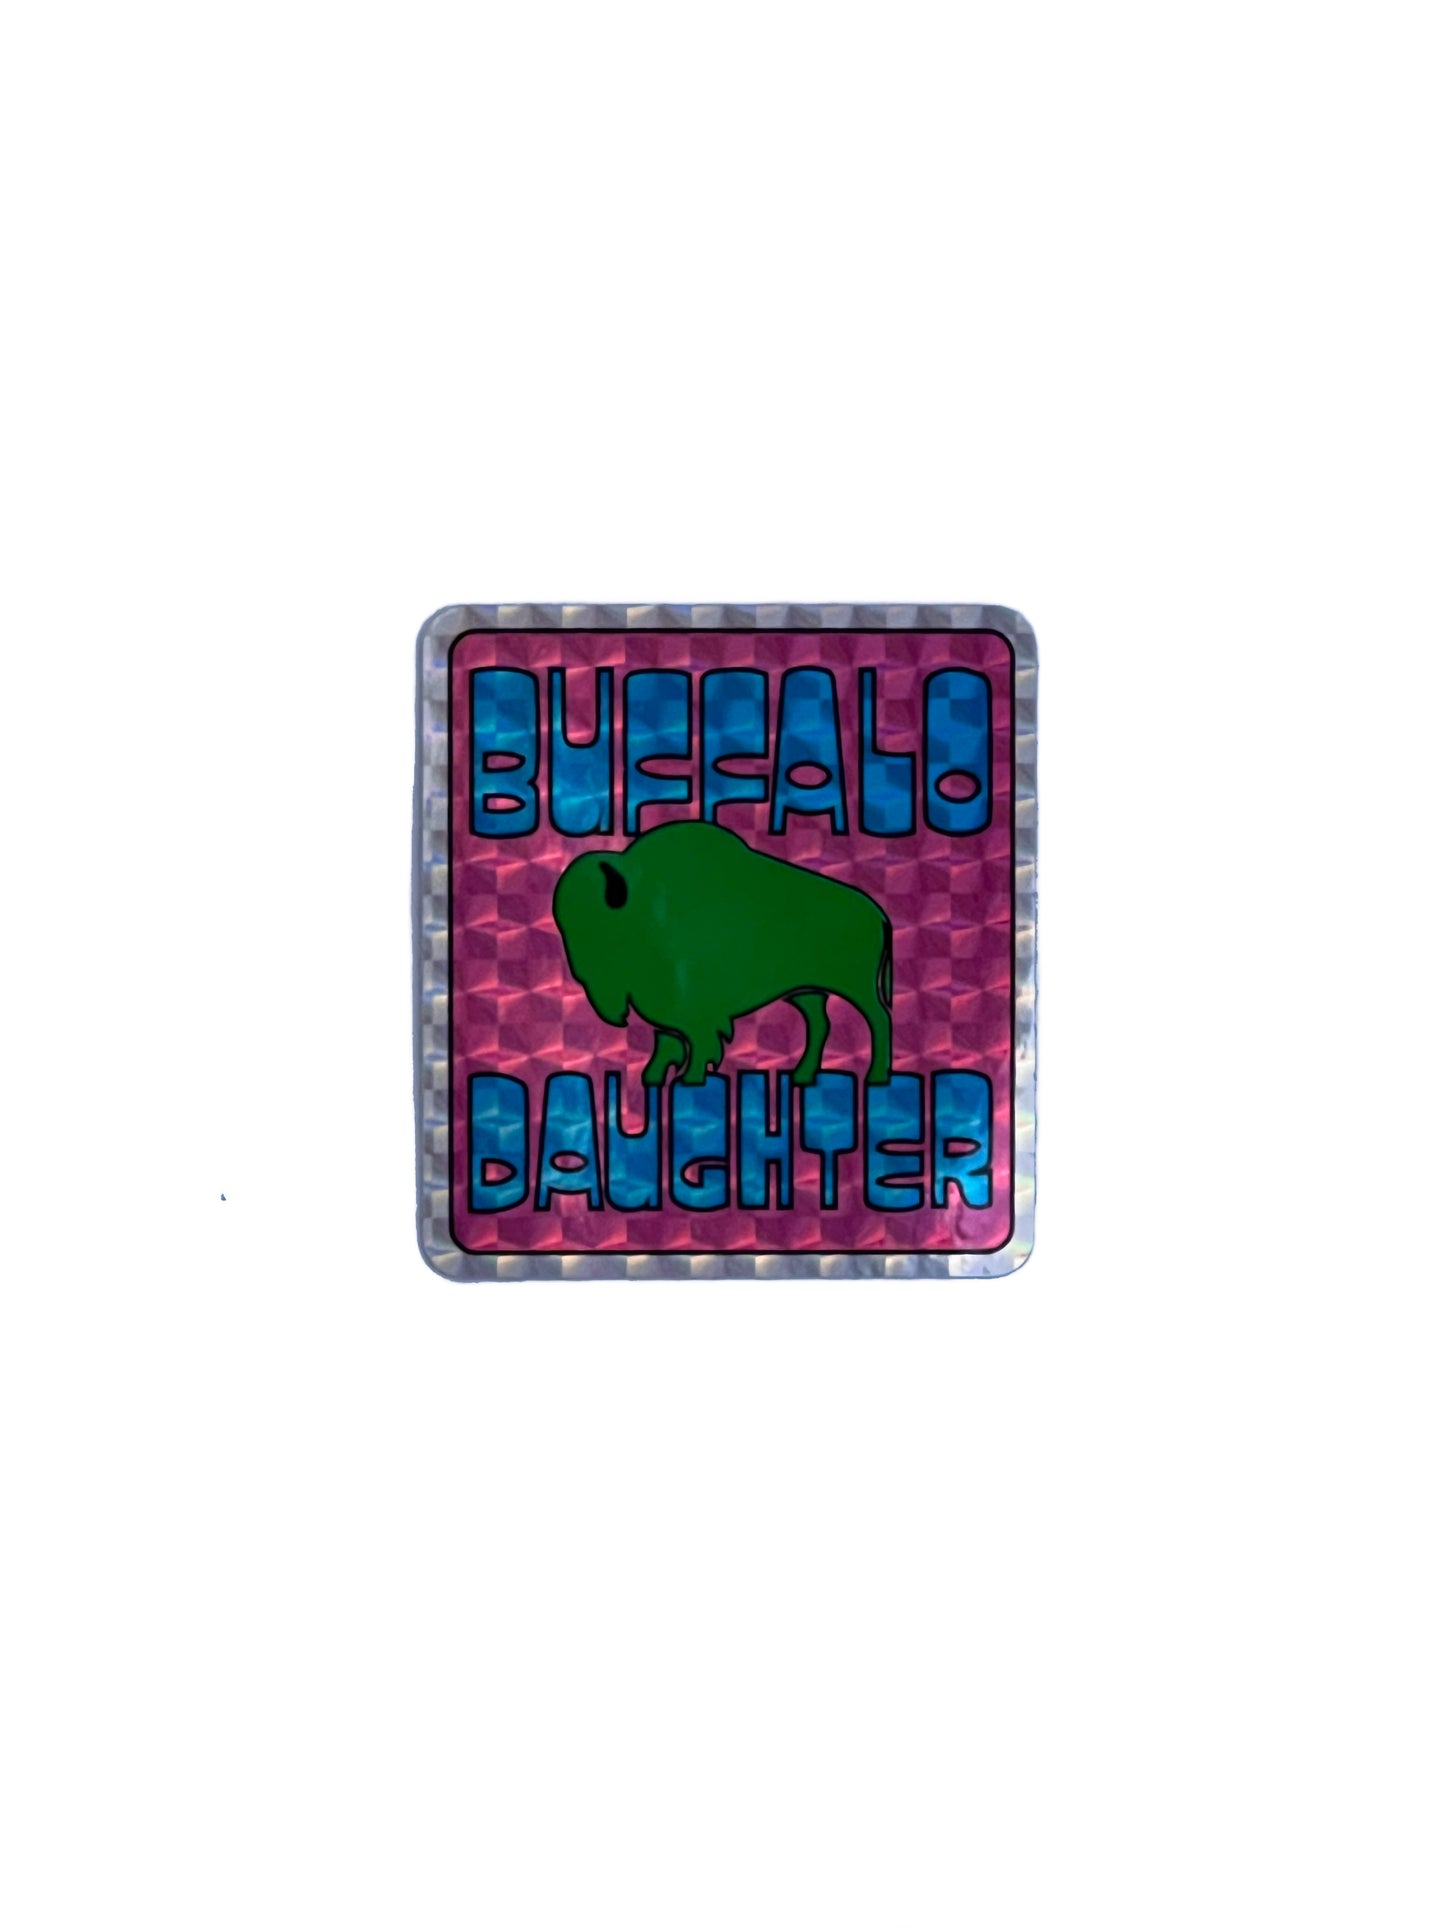 Buffallo Daughter 「Pshychic / Euphorica」 Tote bag (sticker set)